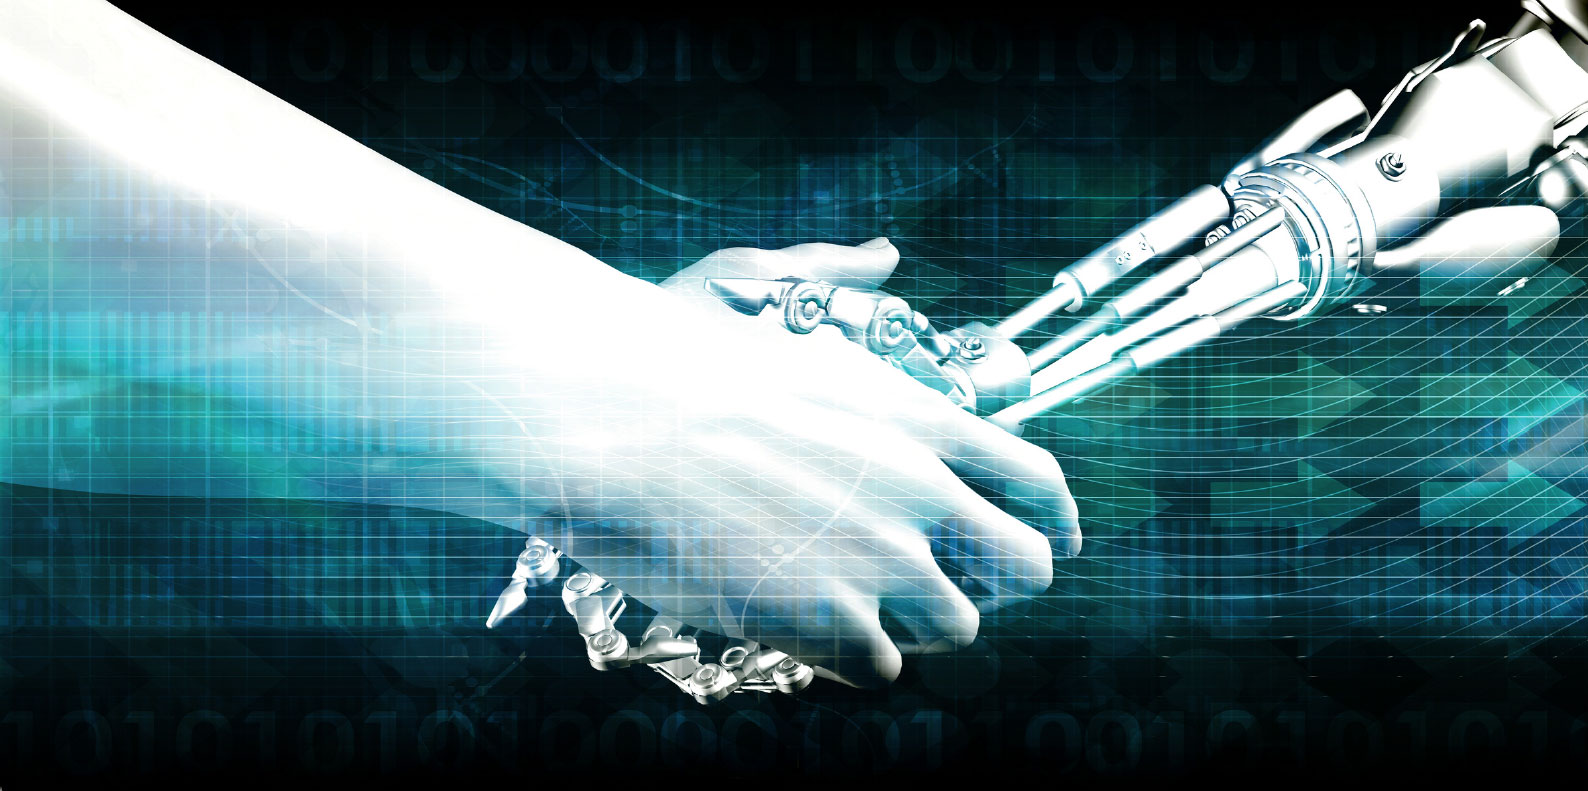 A human hand shakes a robotic hand